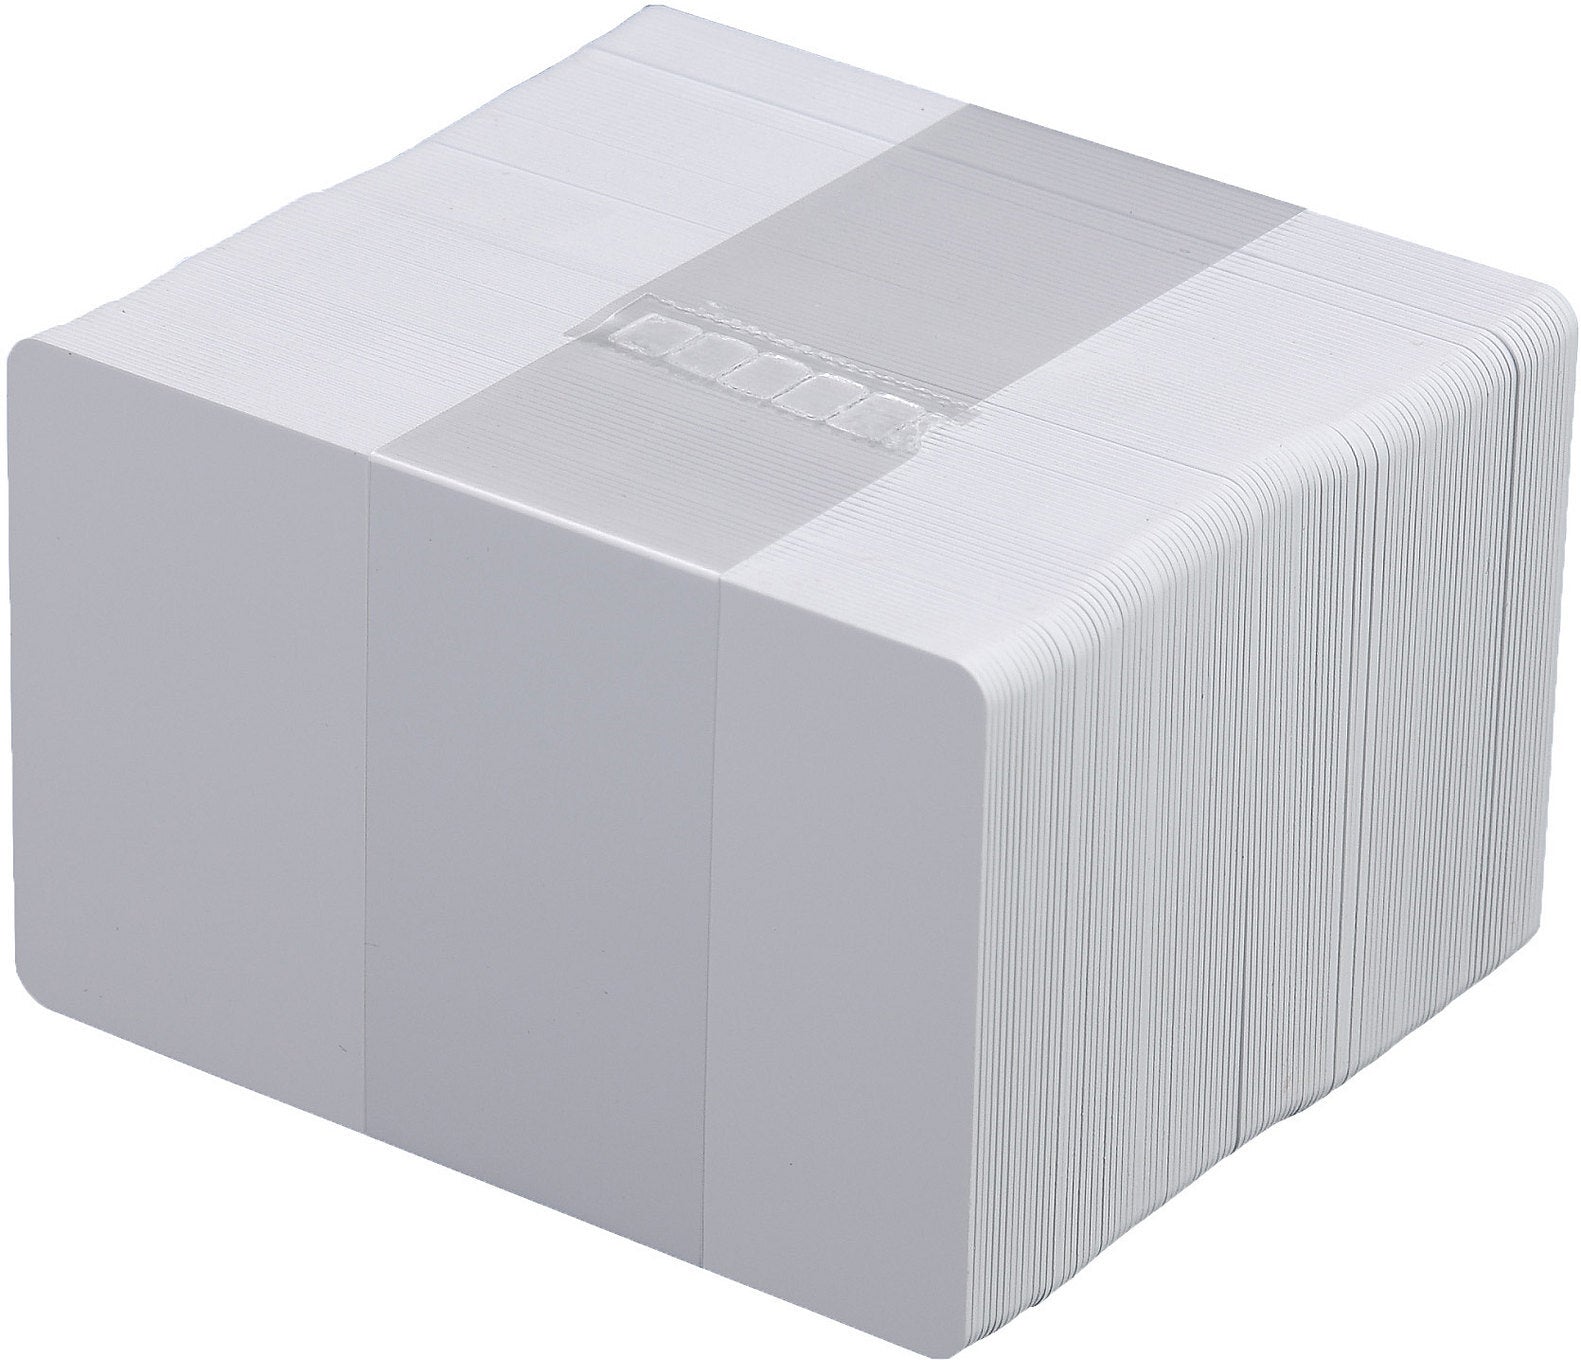 Blank White PVC Plastic ID Cards 760 micron | SPLIT PACKS - 5